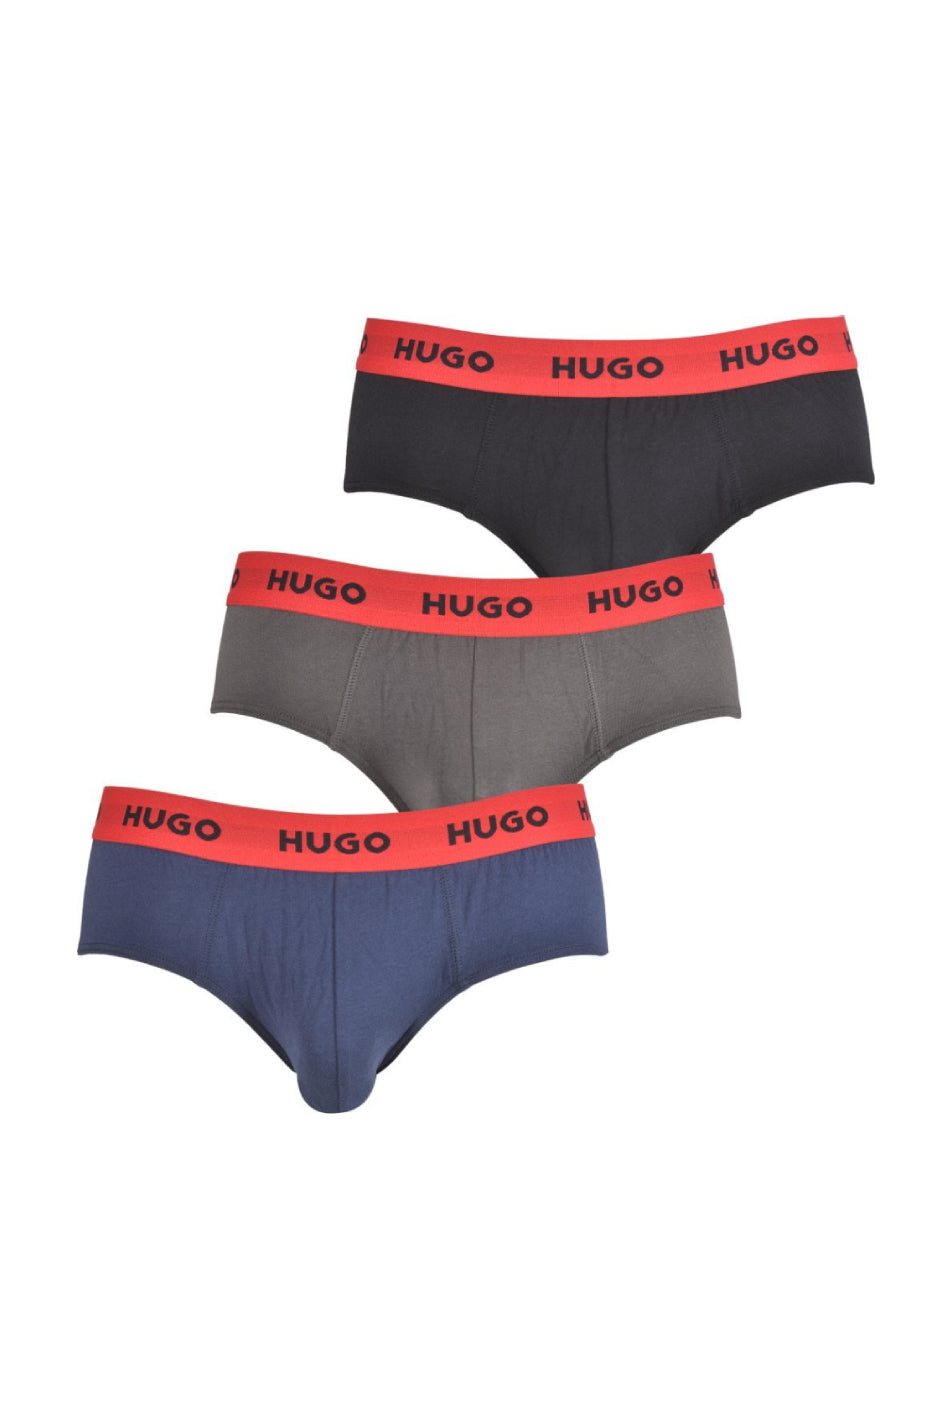 HUGO 3 Pack Men's Brief